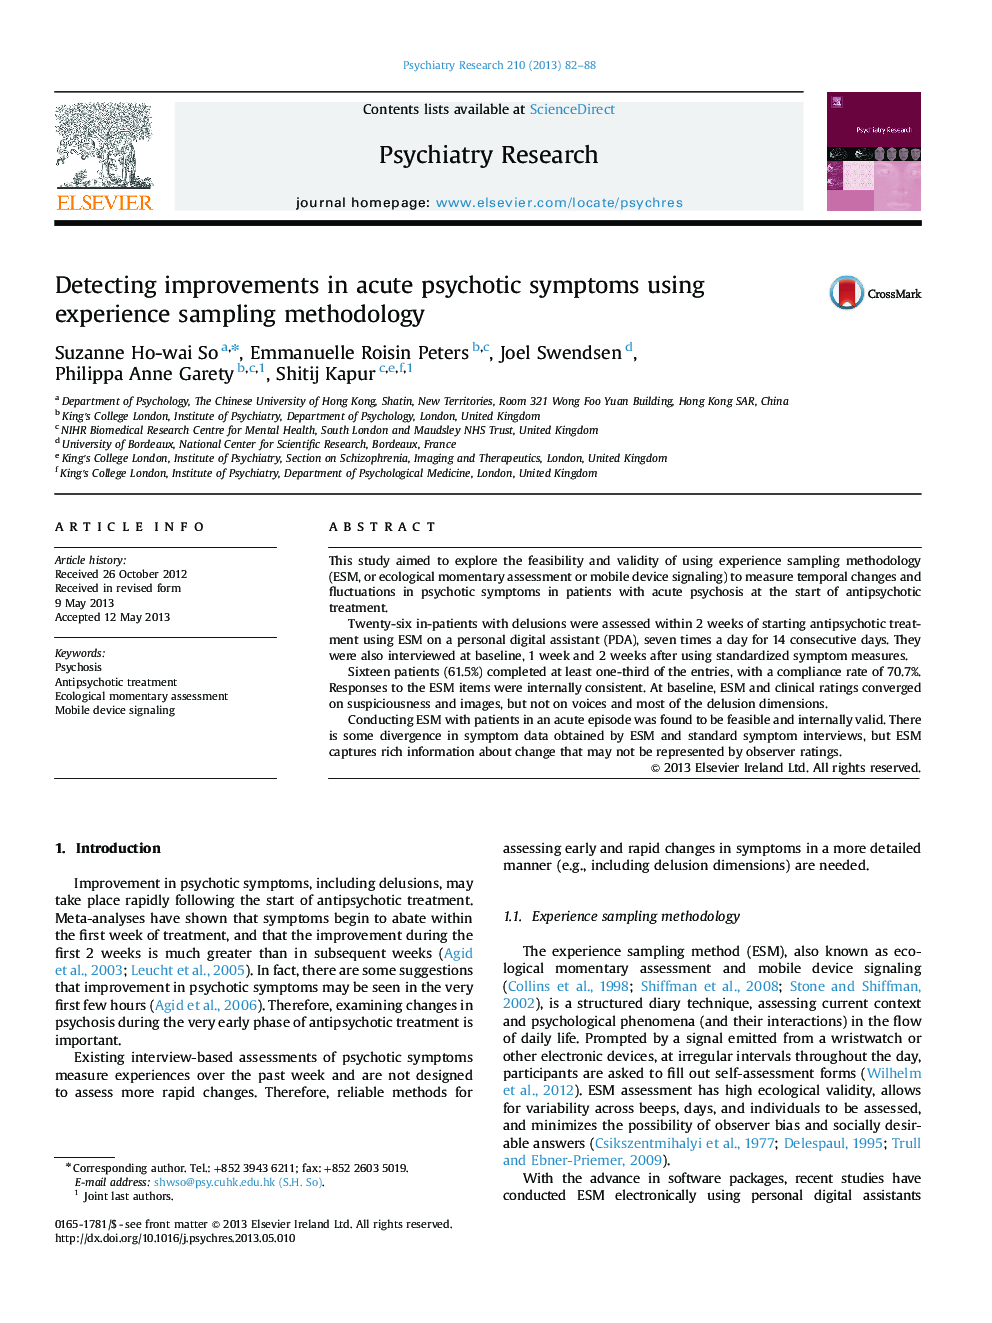 Detecting improvements in acute psychotic symptoms using experience sampling methodology